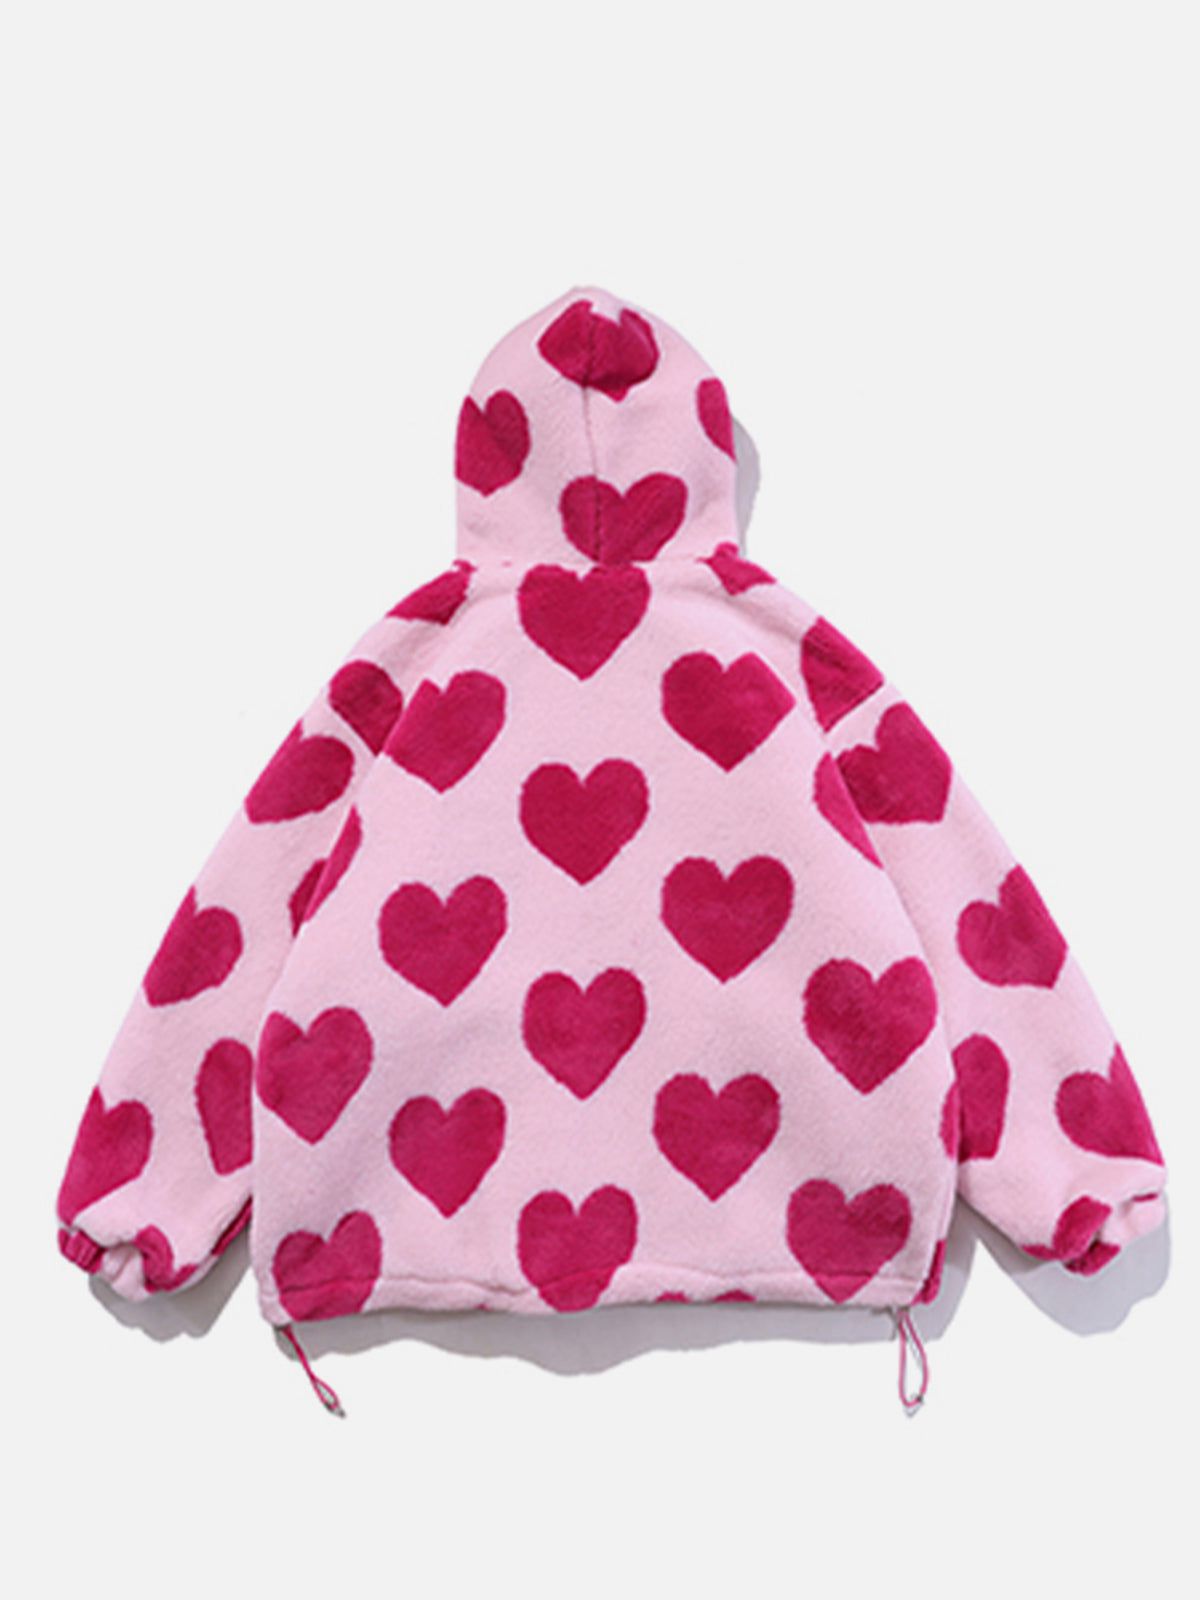 LUXENFY™ - Vintage Heart Pattern Oversize Sherpa Coat luxenfy.com